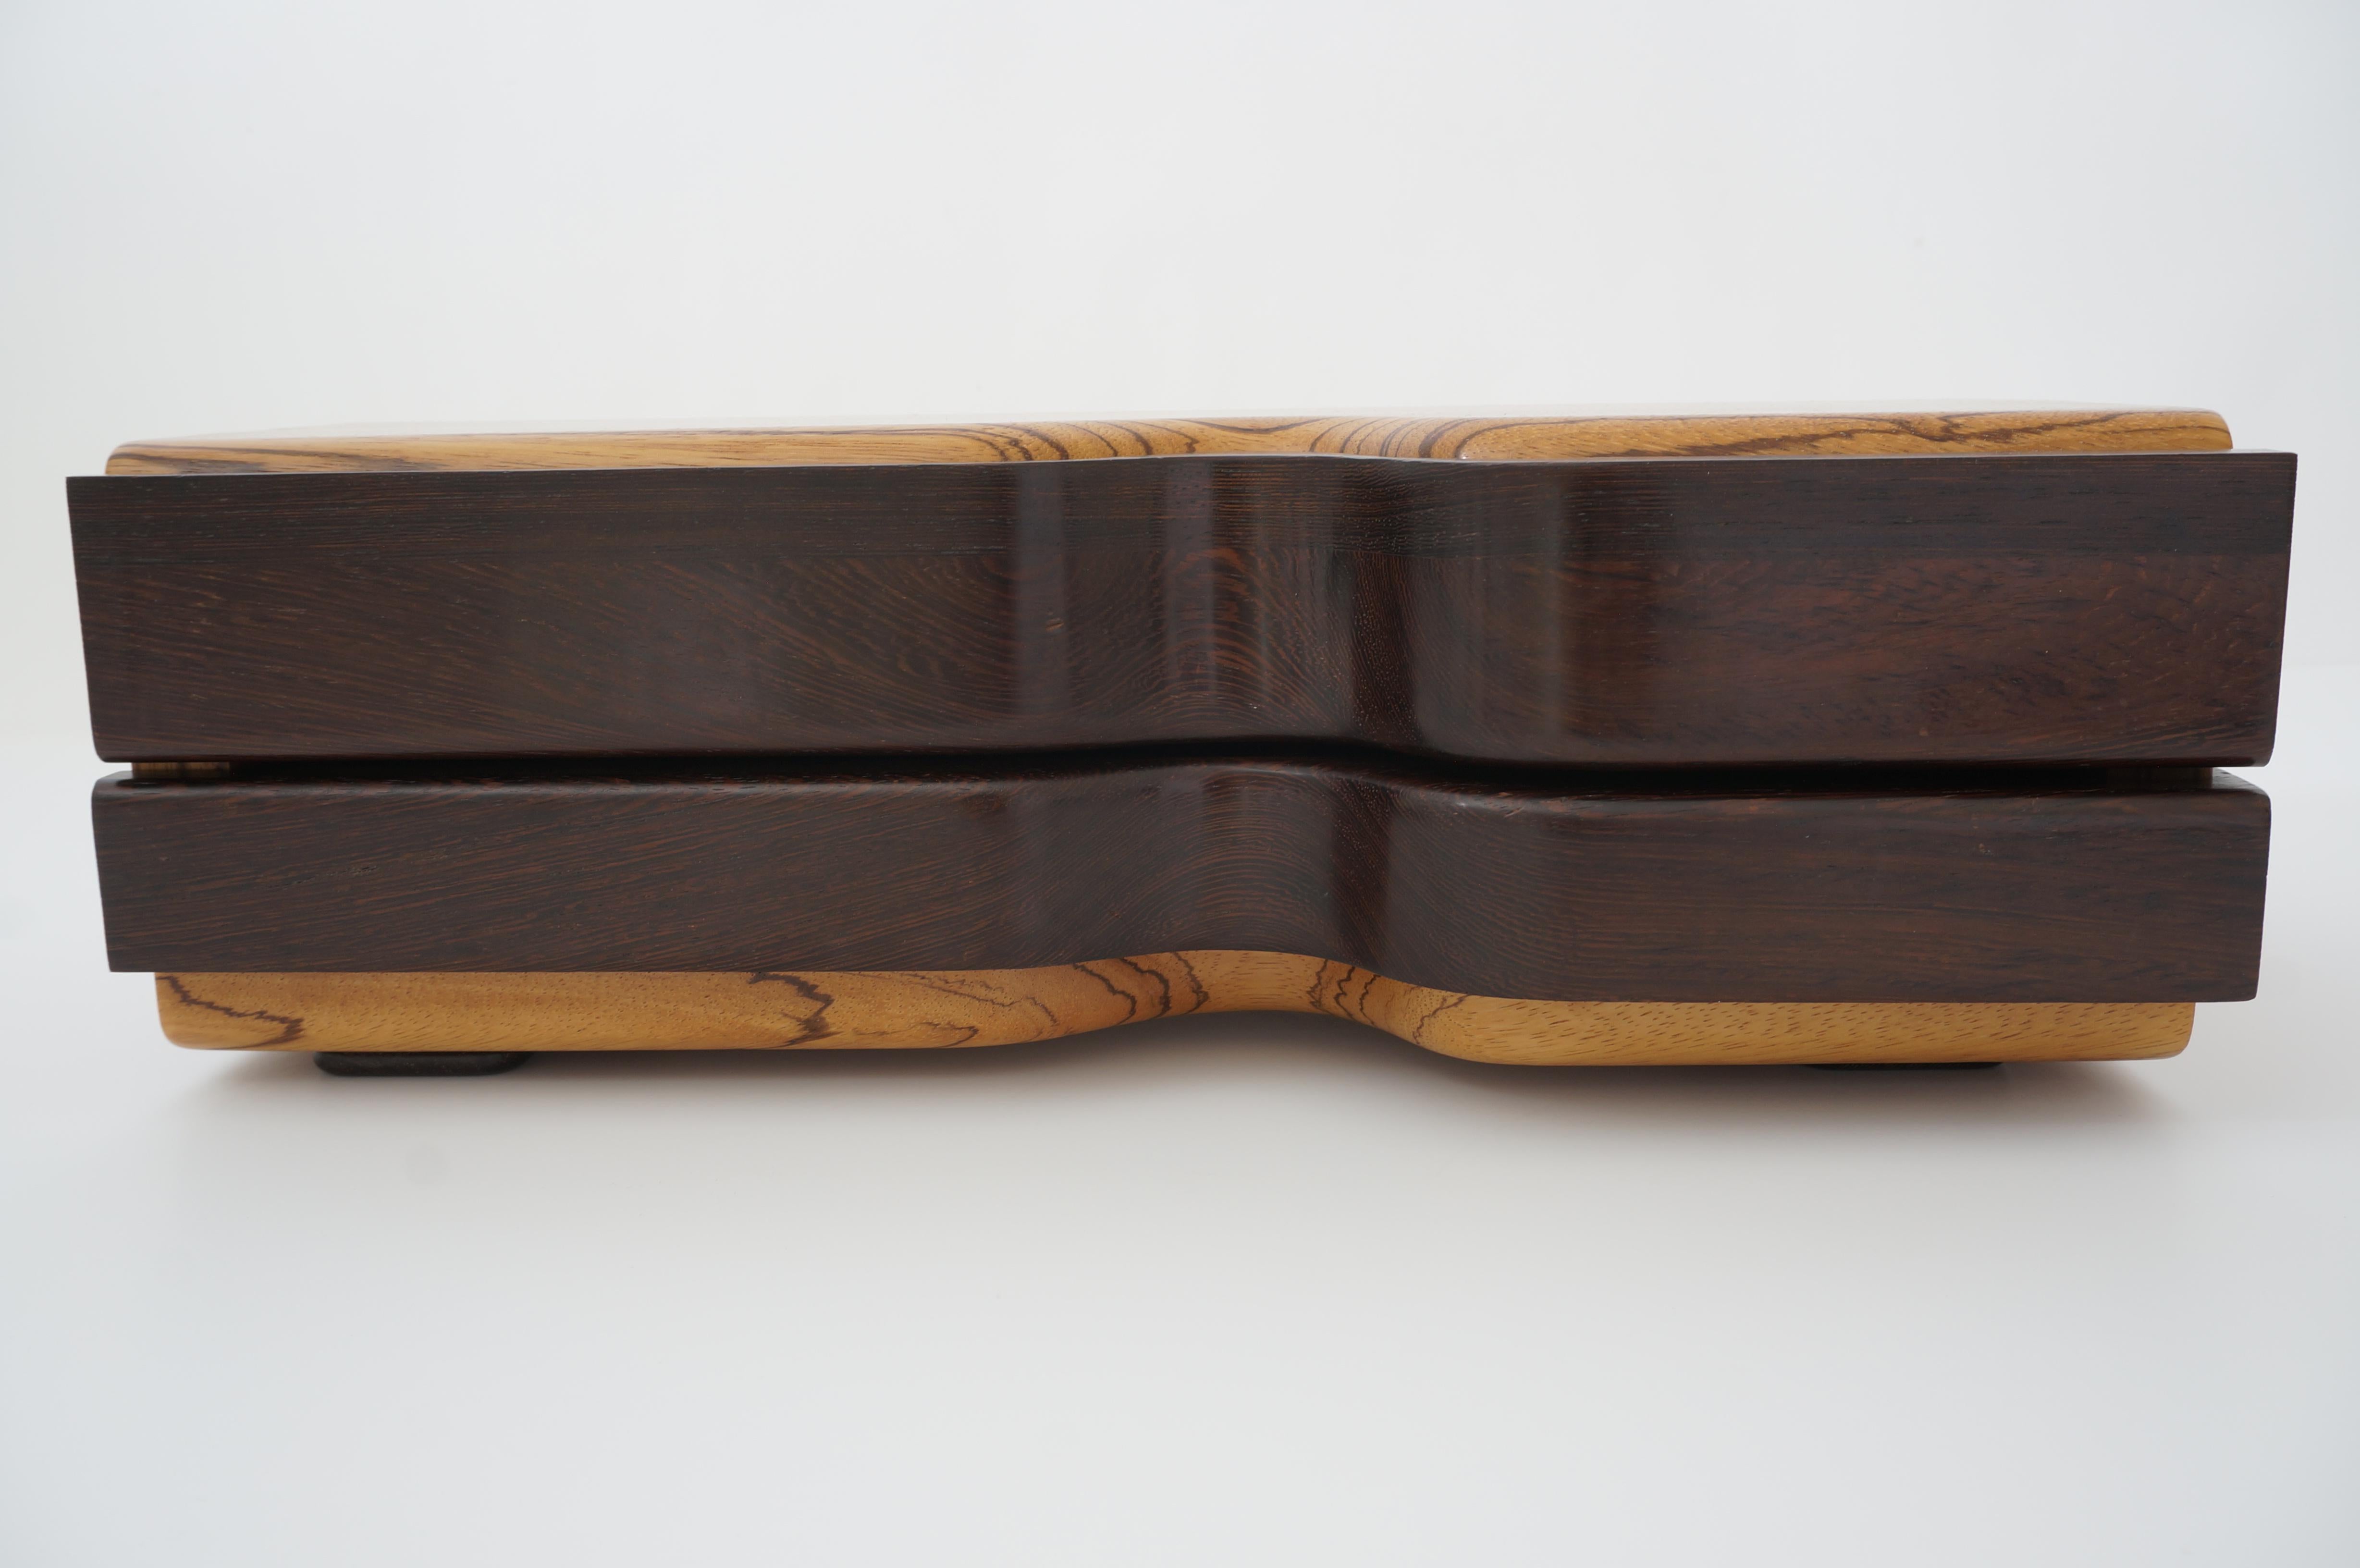 Hand-Crafted Artisan Wood Jewelry Box